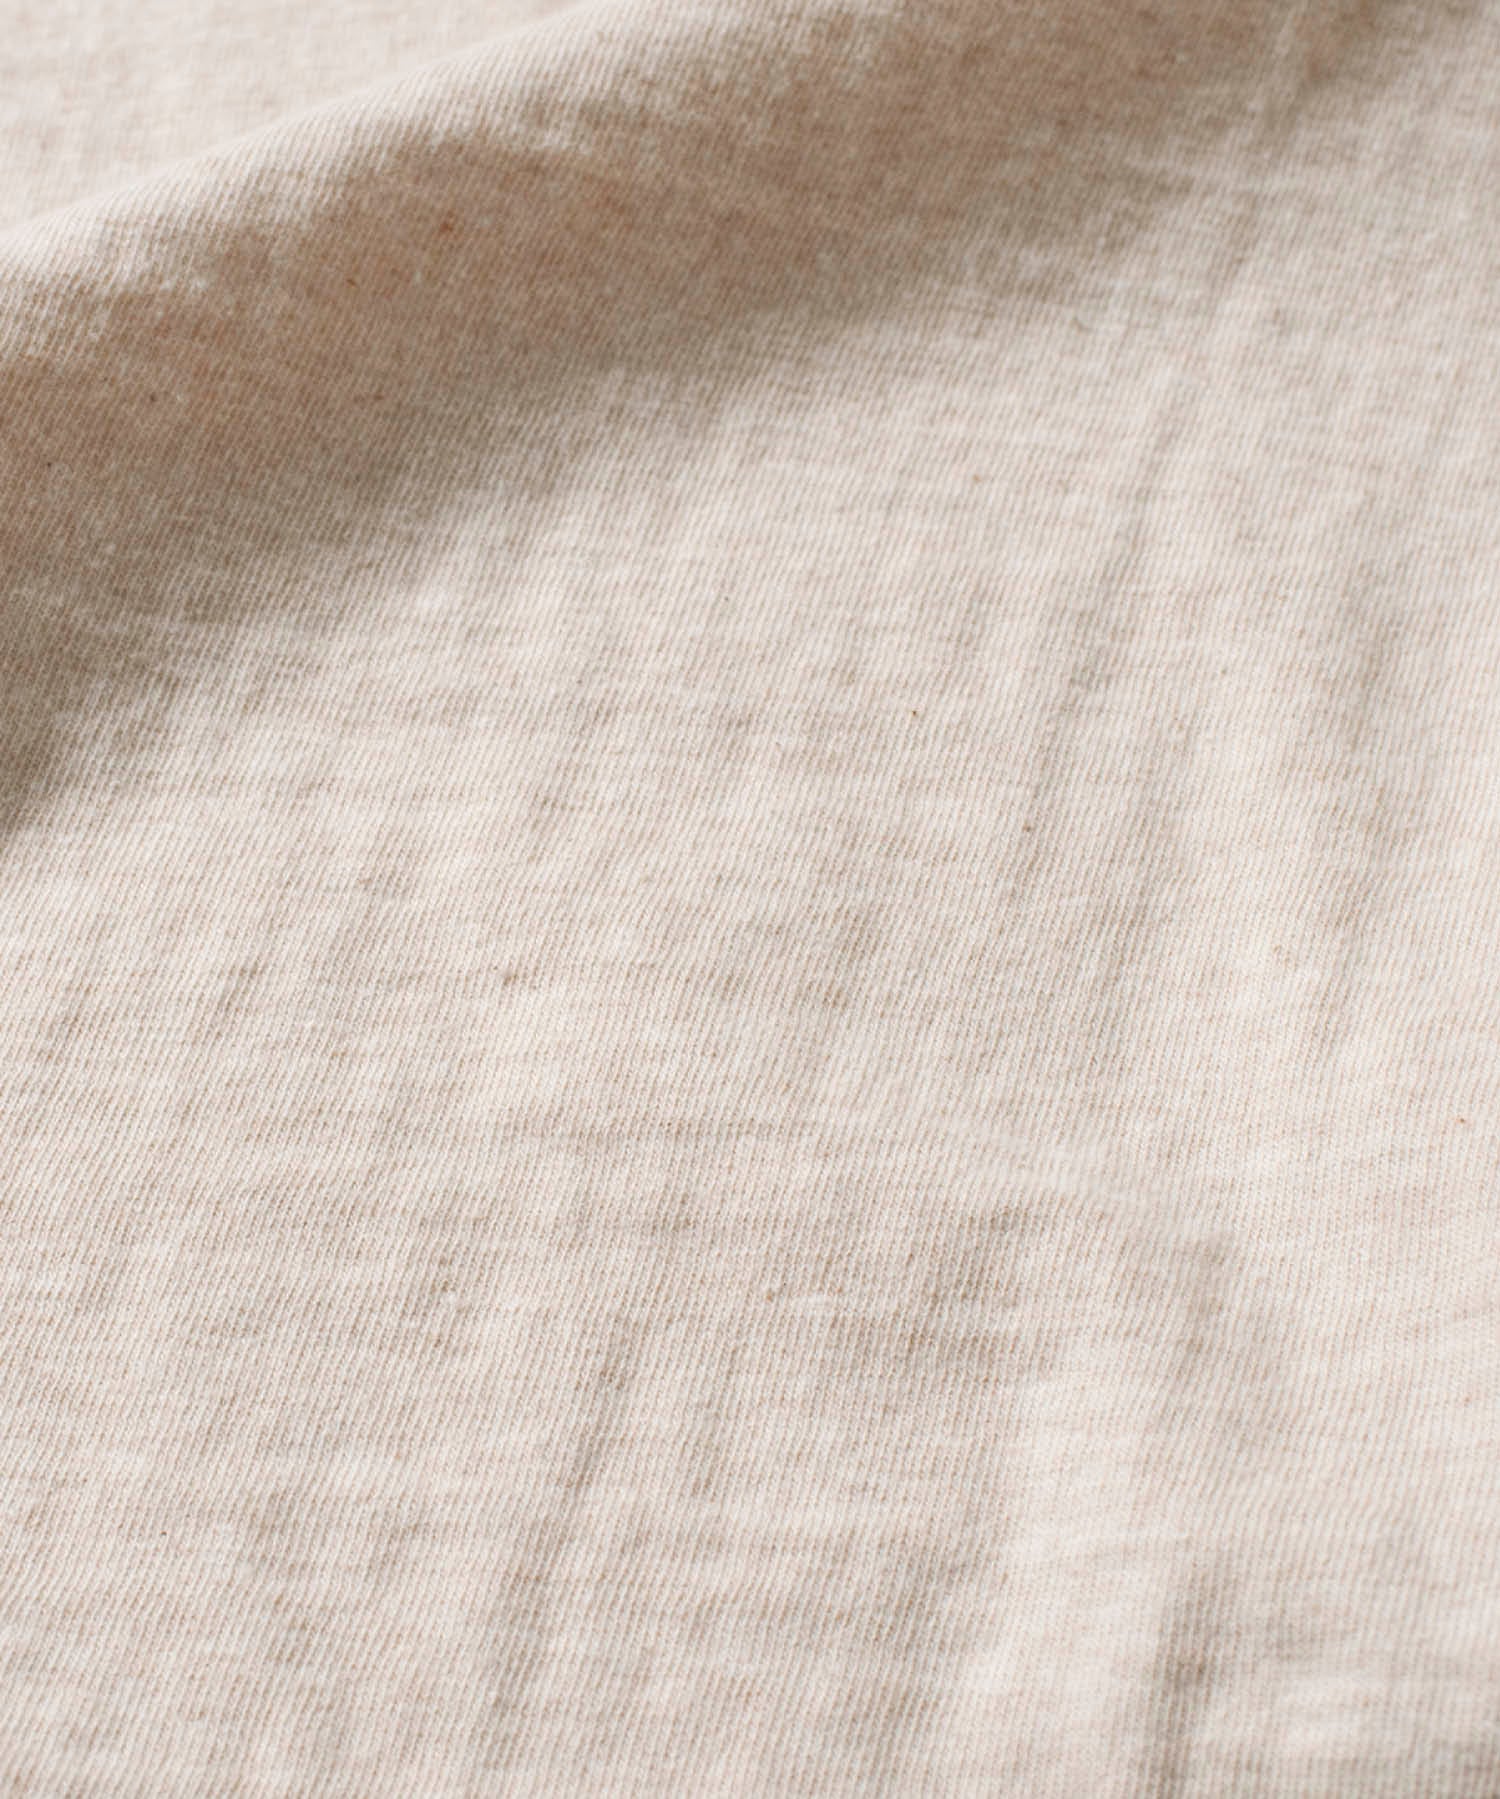 Recycle Organic Cotton Tee - Dreamers | リサイクルオーガニックコットンTシャツ | GENTA TANAKA